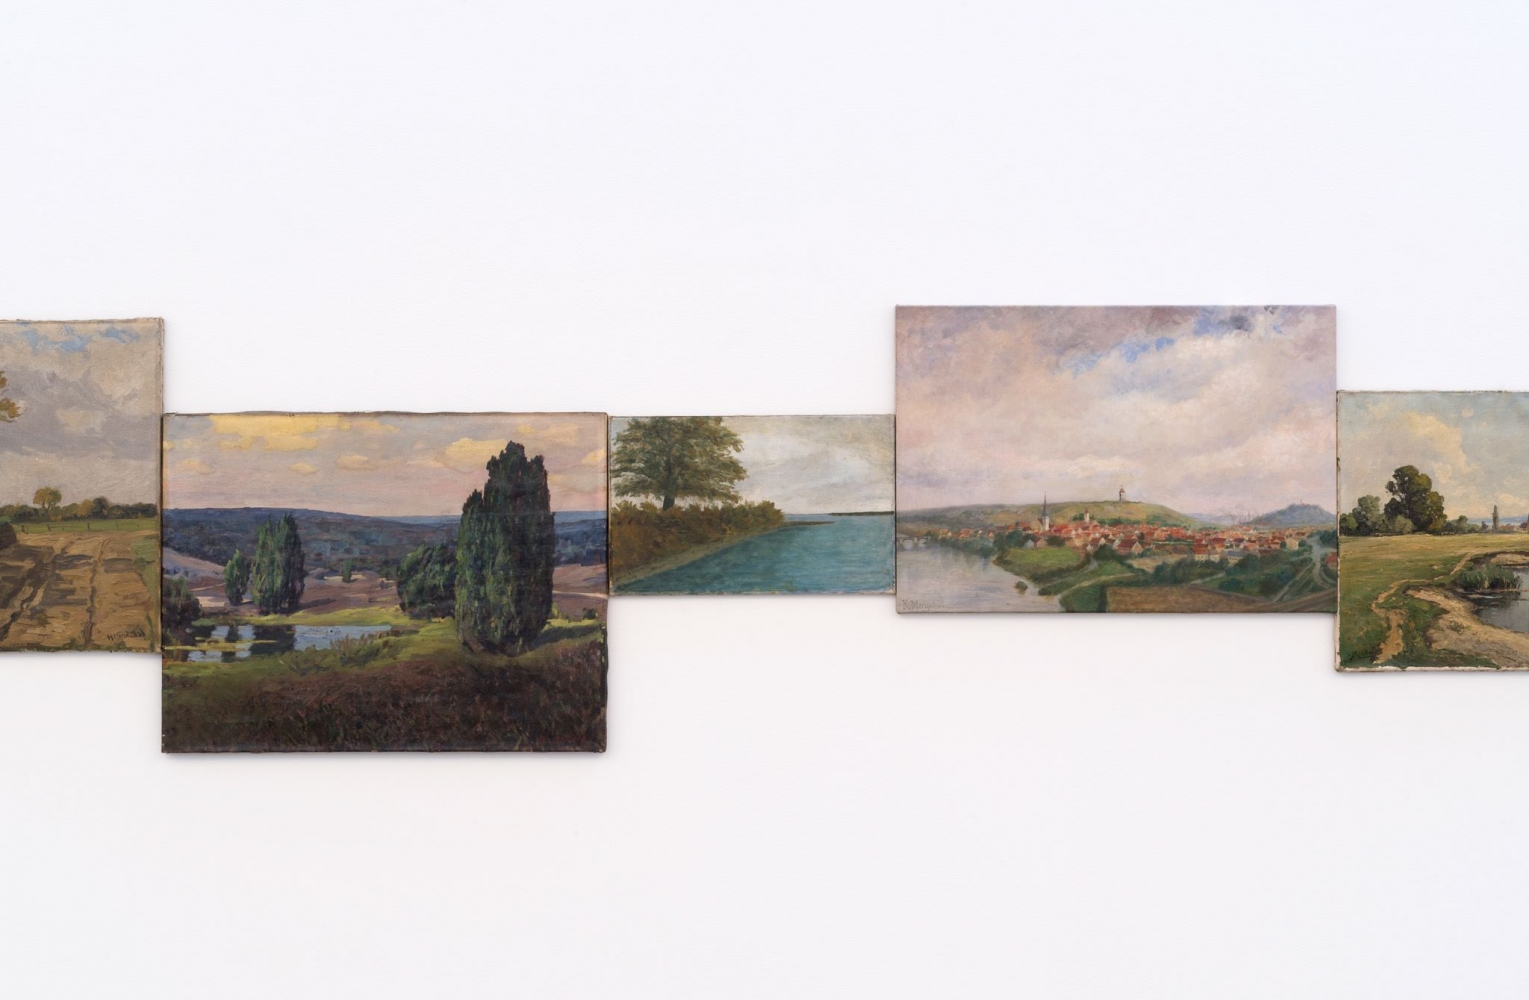 Hans-Peter Feldmann

Horizon

Eleven oil paintings on canvas

34 x 281 1/4 inches (86.4 x 714.4 cm)

HPF 435

&amp;euro;150,000

&amp;nbsp;

INQUIRE